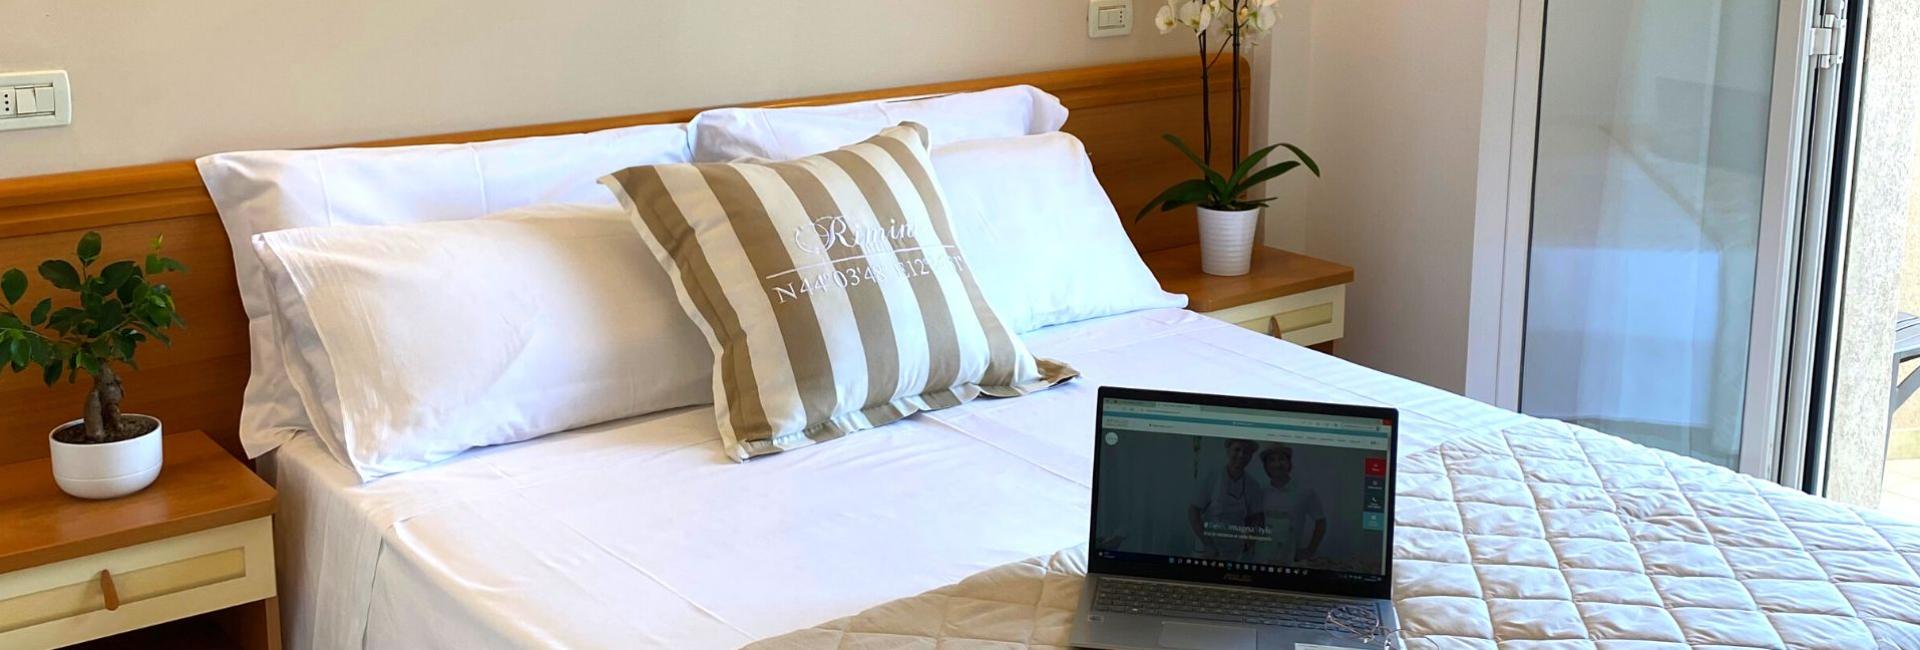 hotelapogeo en bed-&-breakfast-august-rimini 007